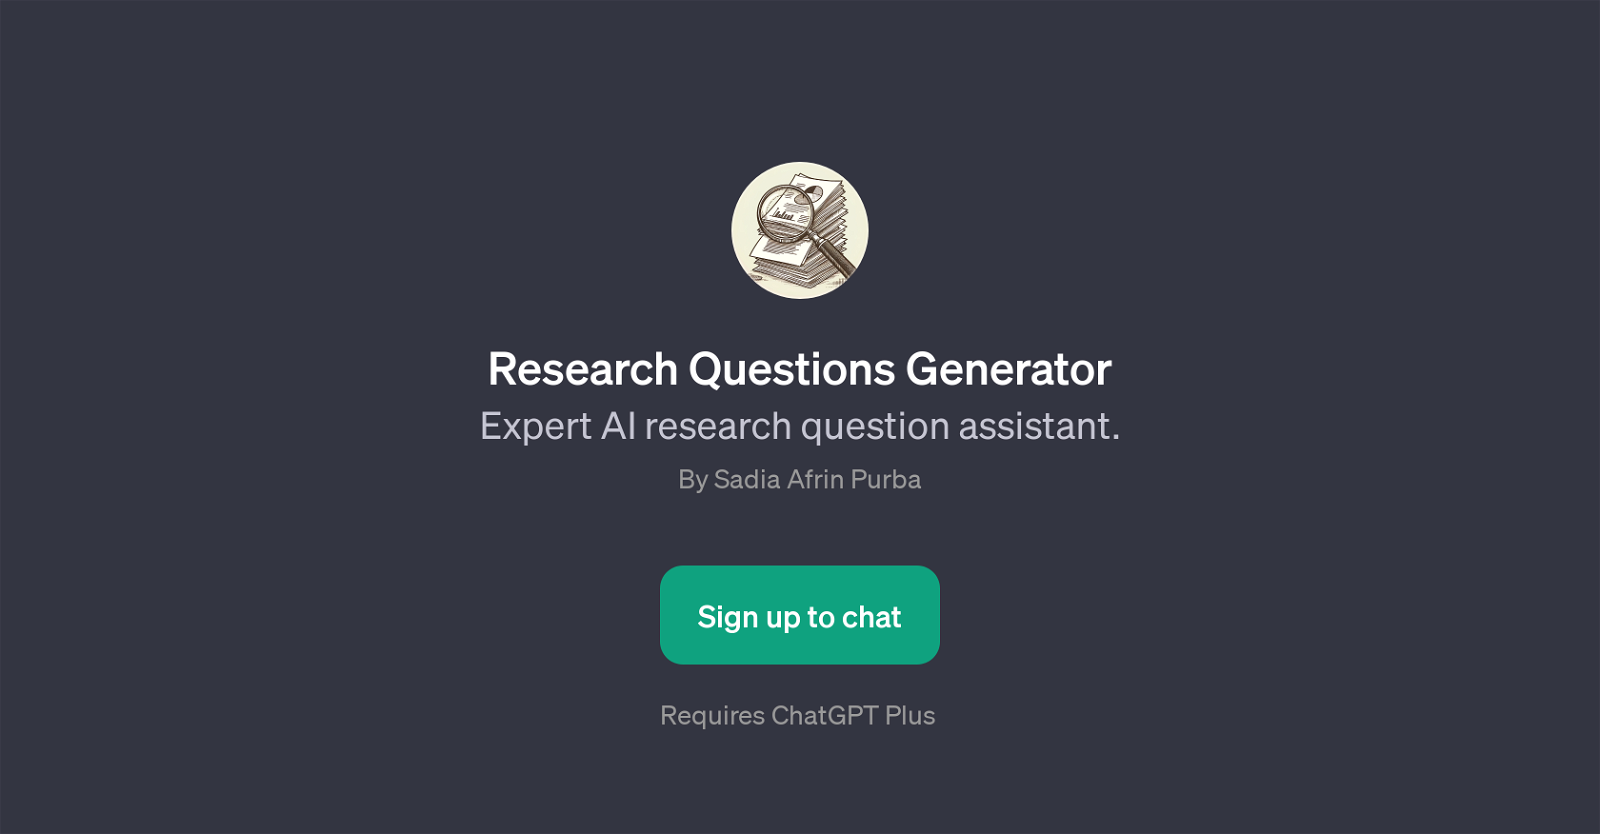 Research Questions Generator website